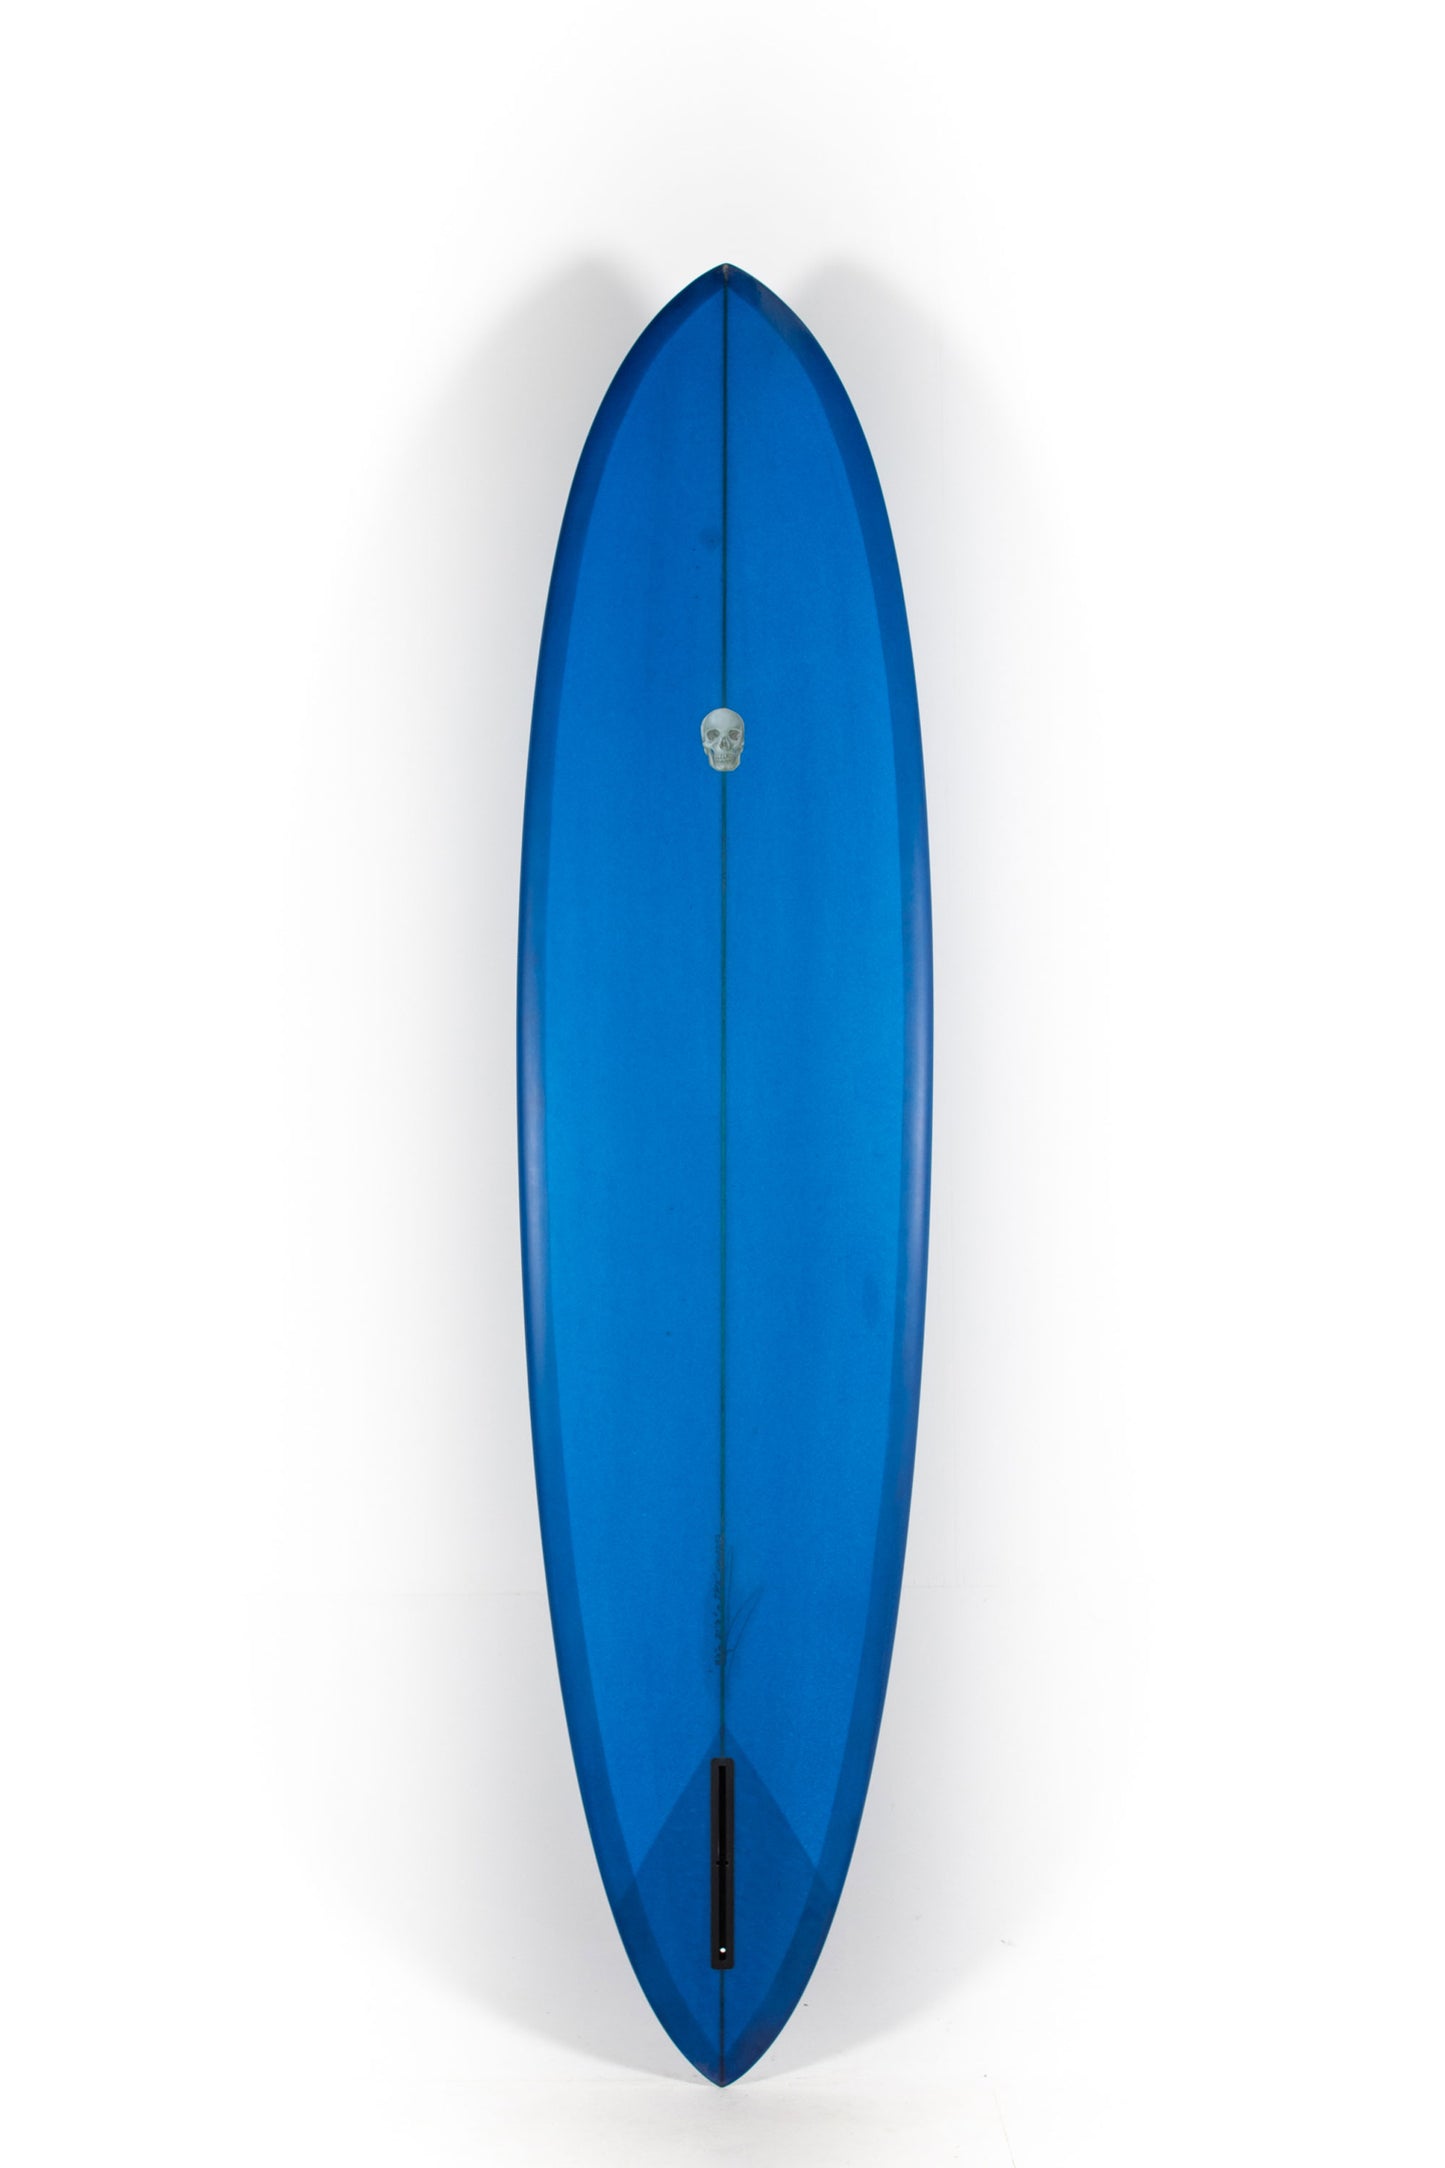 Pukas Surf Shop - Christenson Surfboards - C-BUCKET - 8'0" x 21 1/2 x 2 7/8 - CX03293